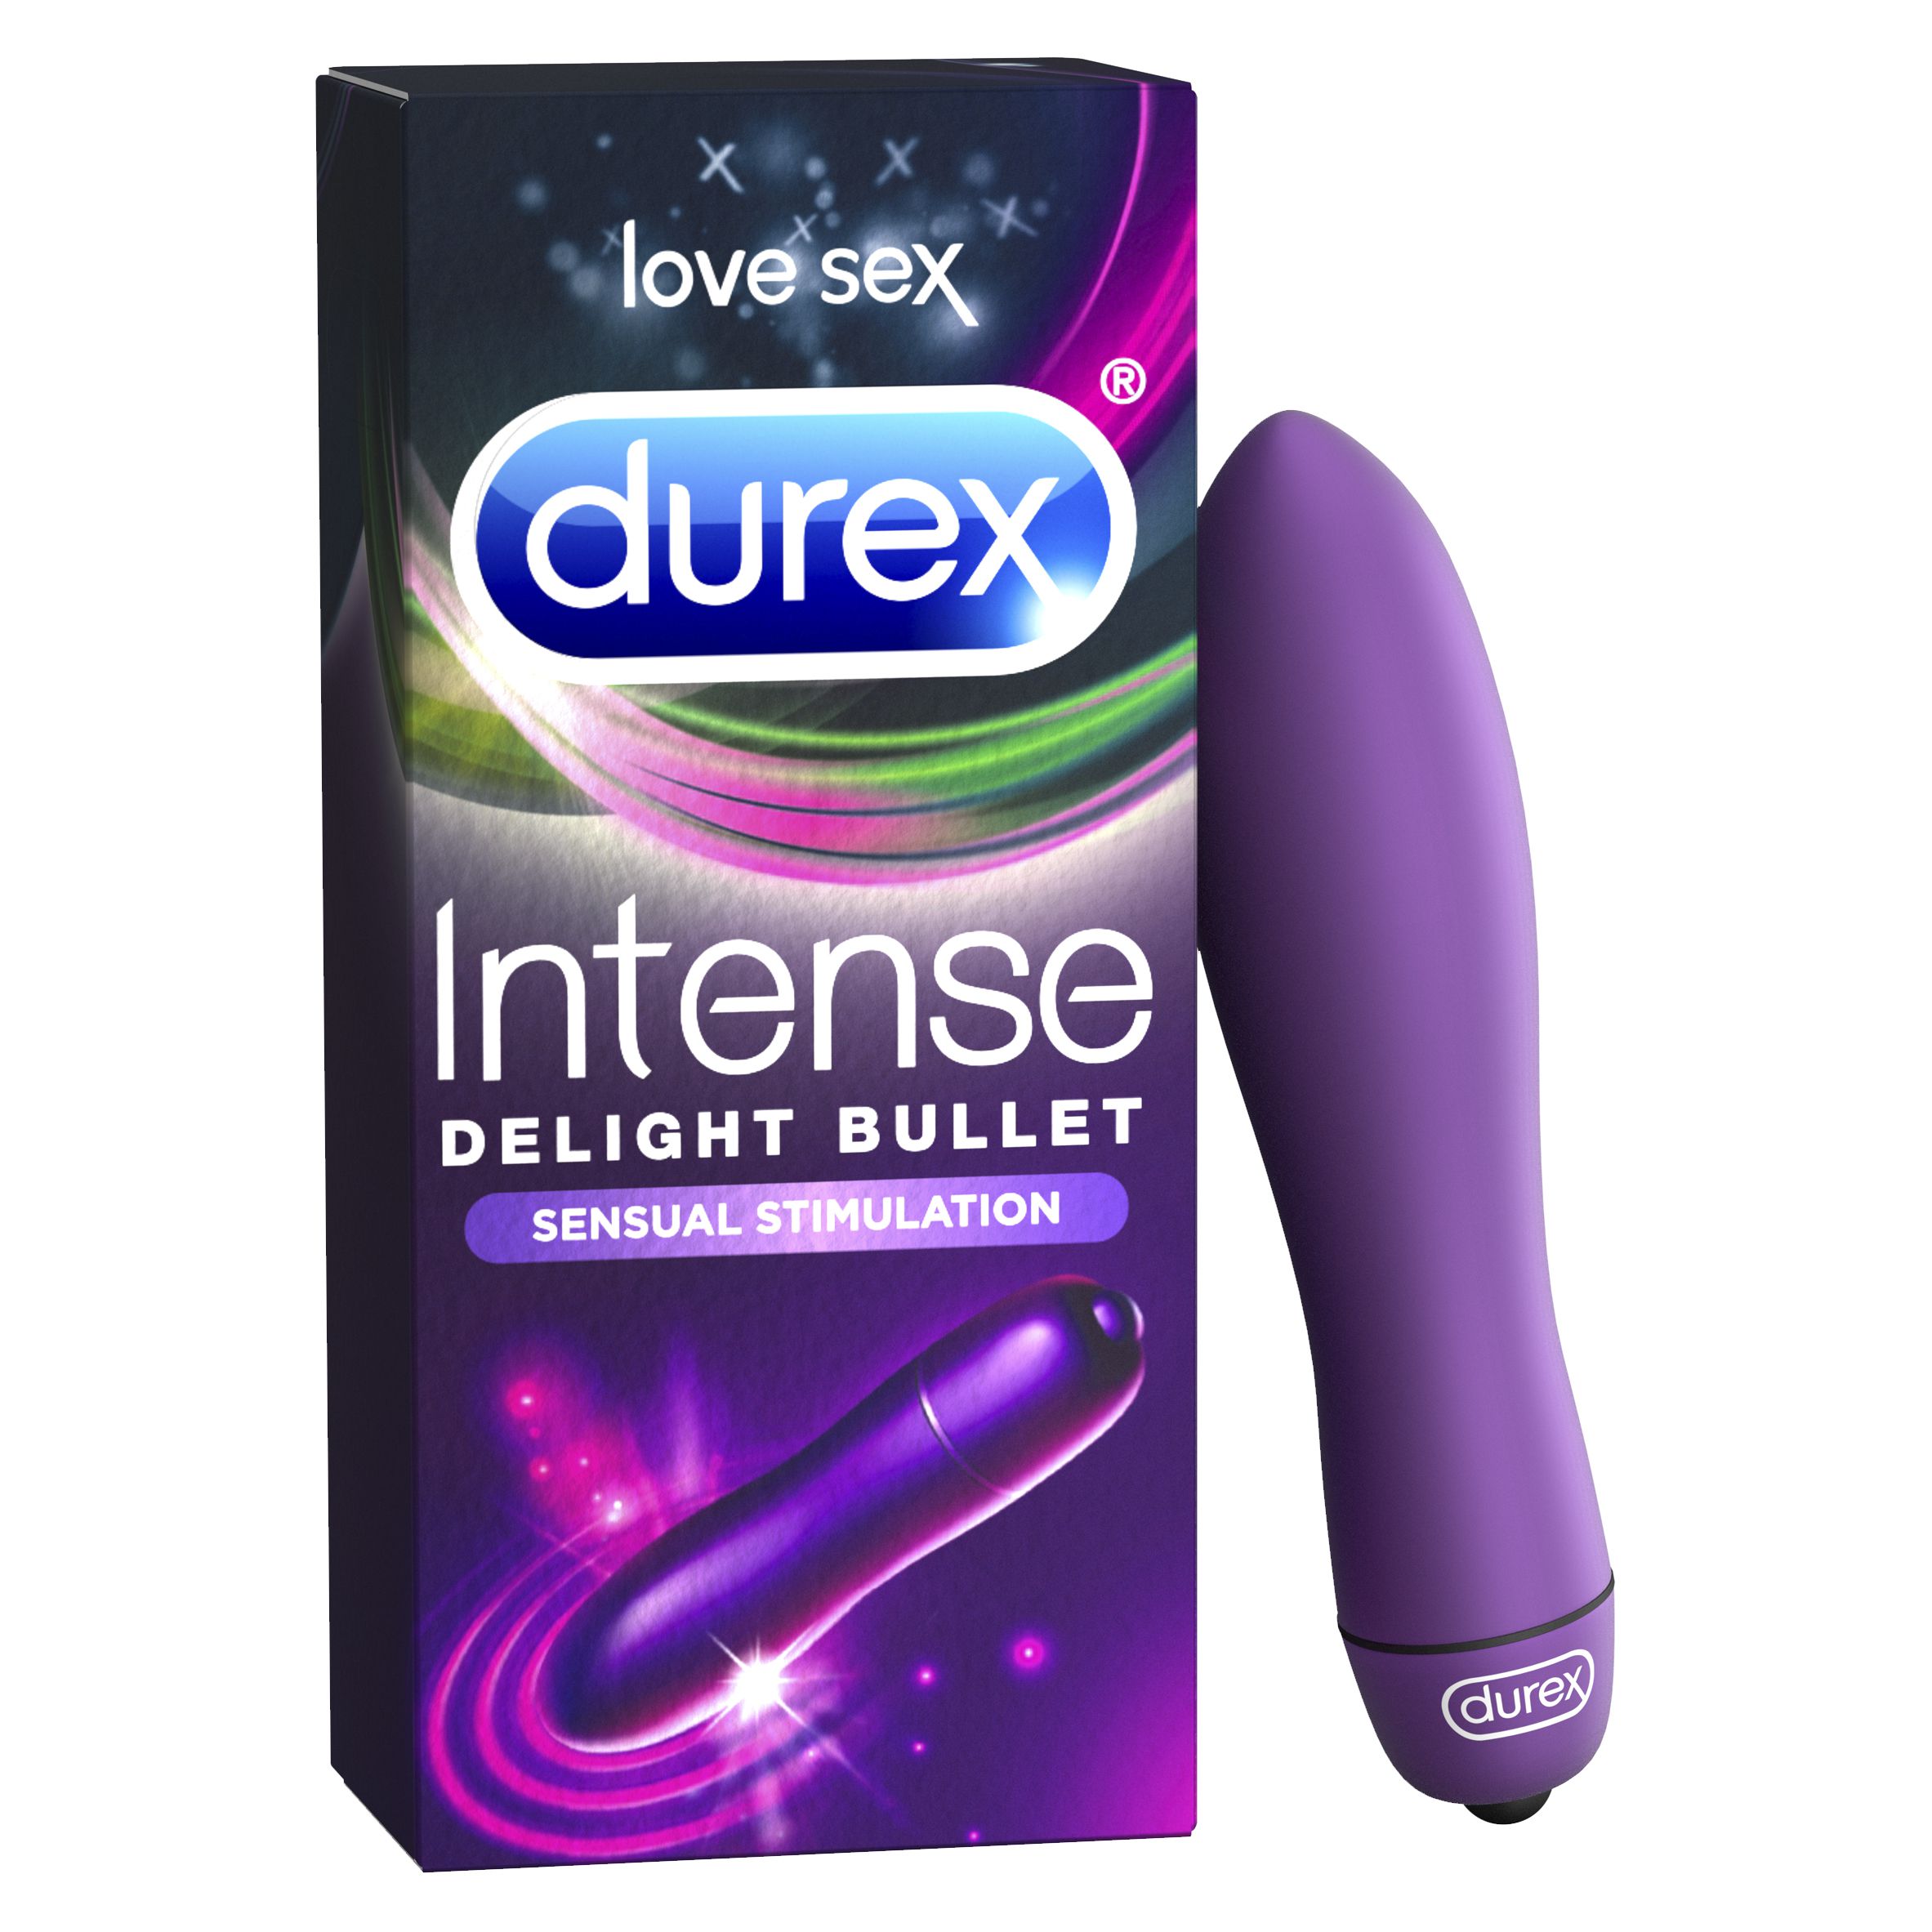 Durex Vibe Bullet